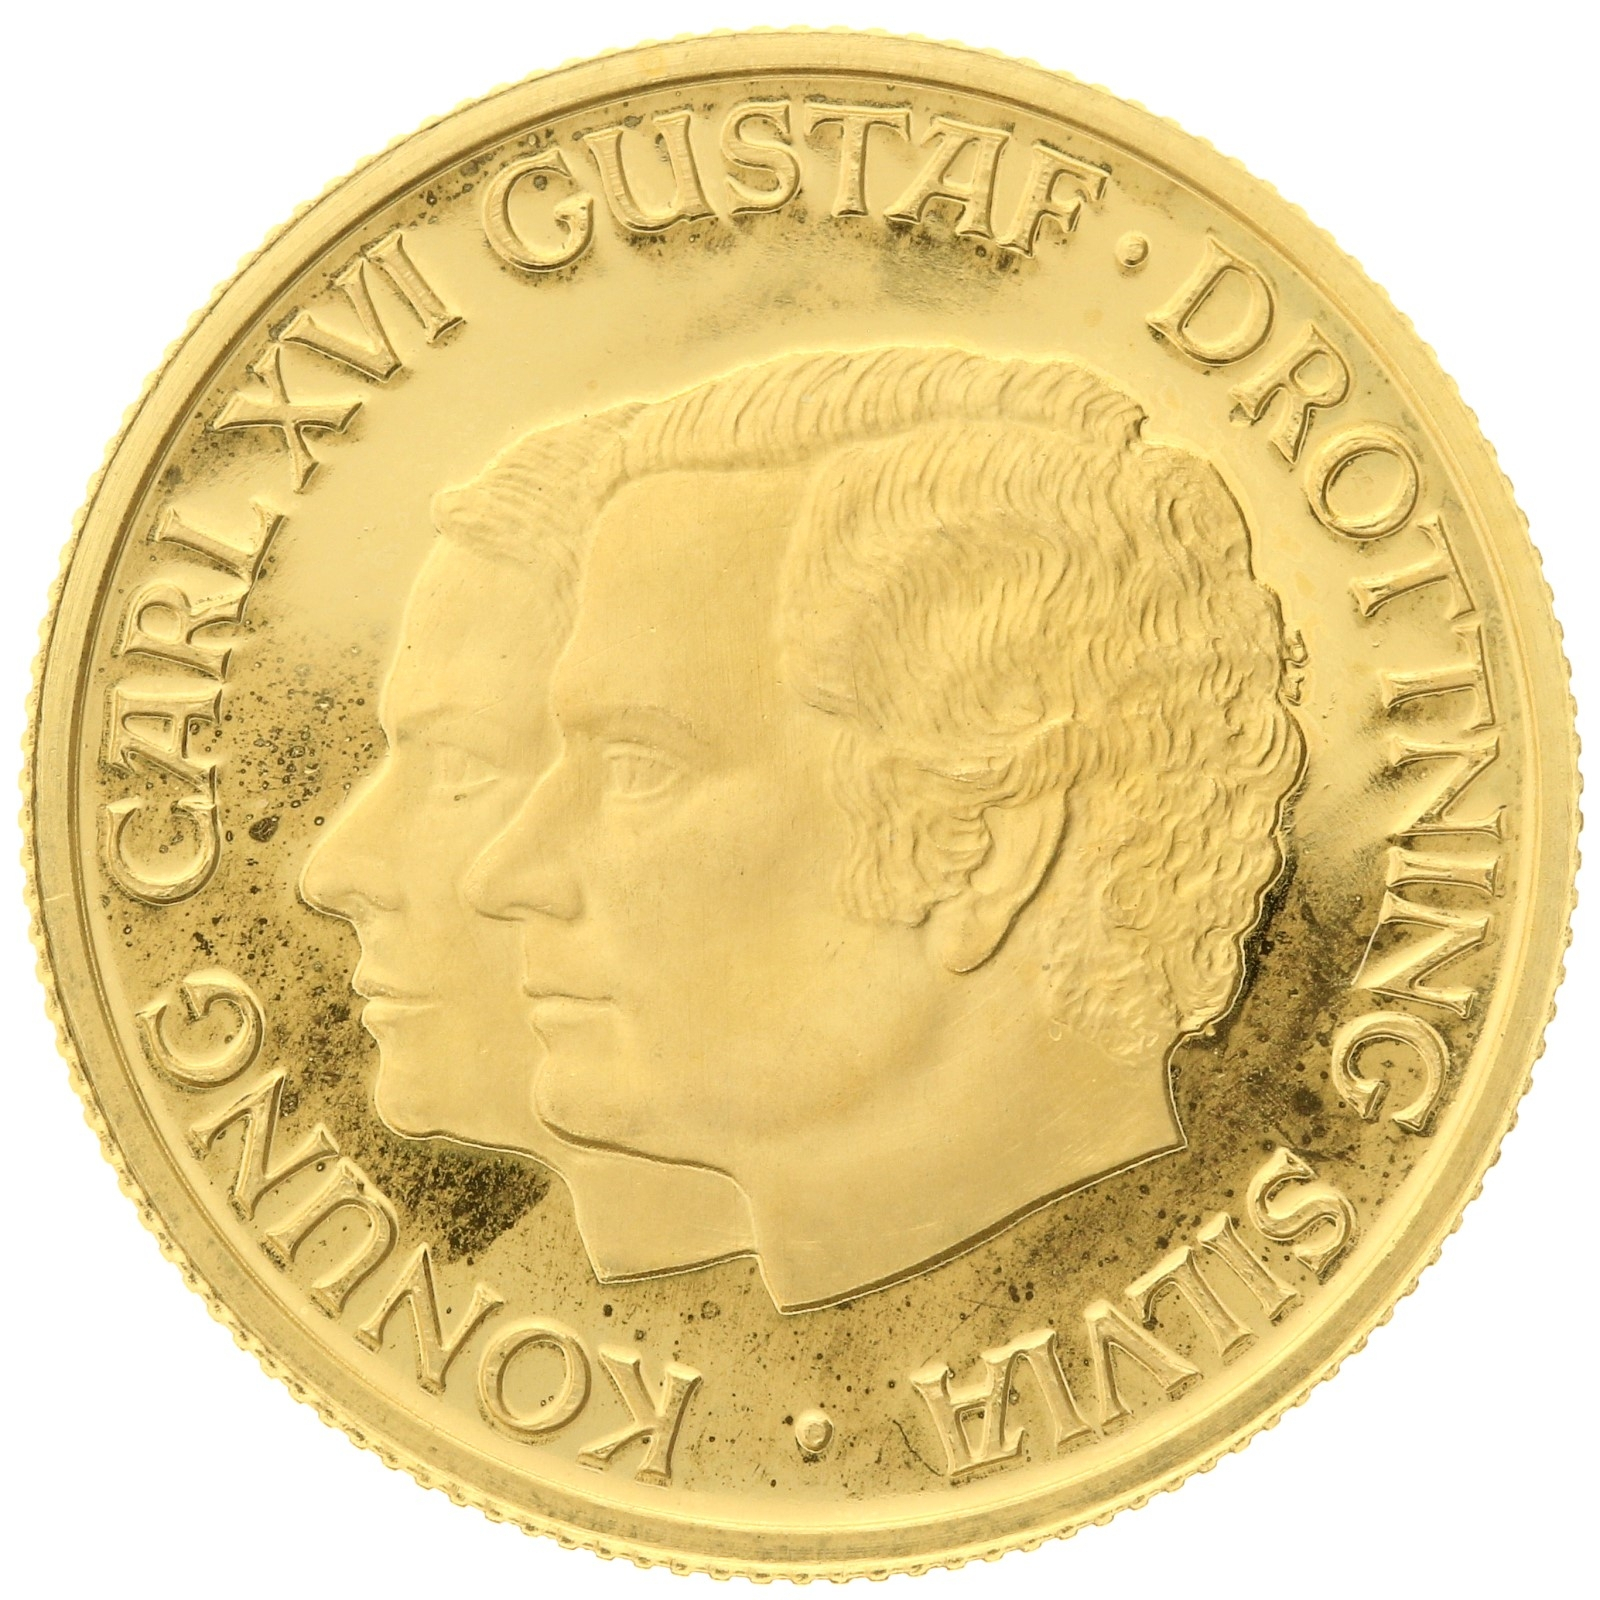 Sweden - Medal (1 ducat) - 1976 - Wedding June 19th 1976